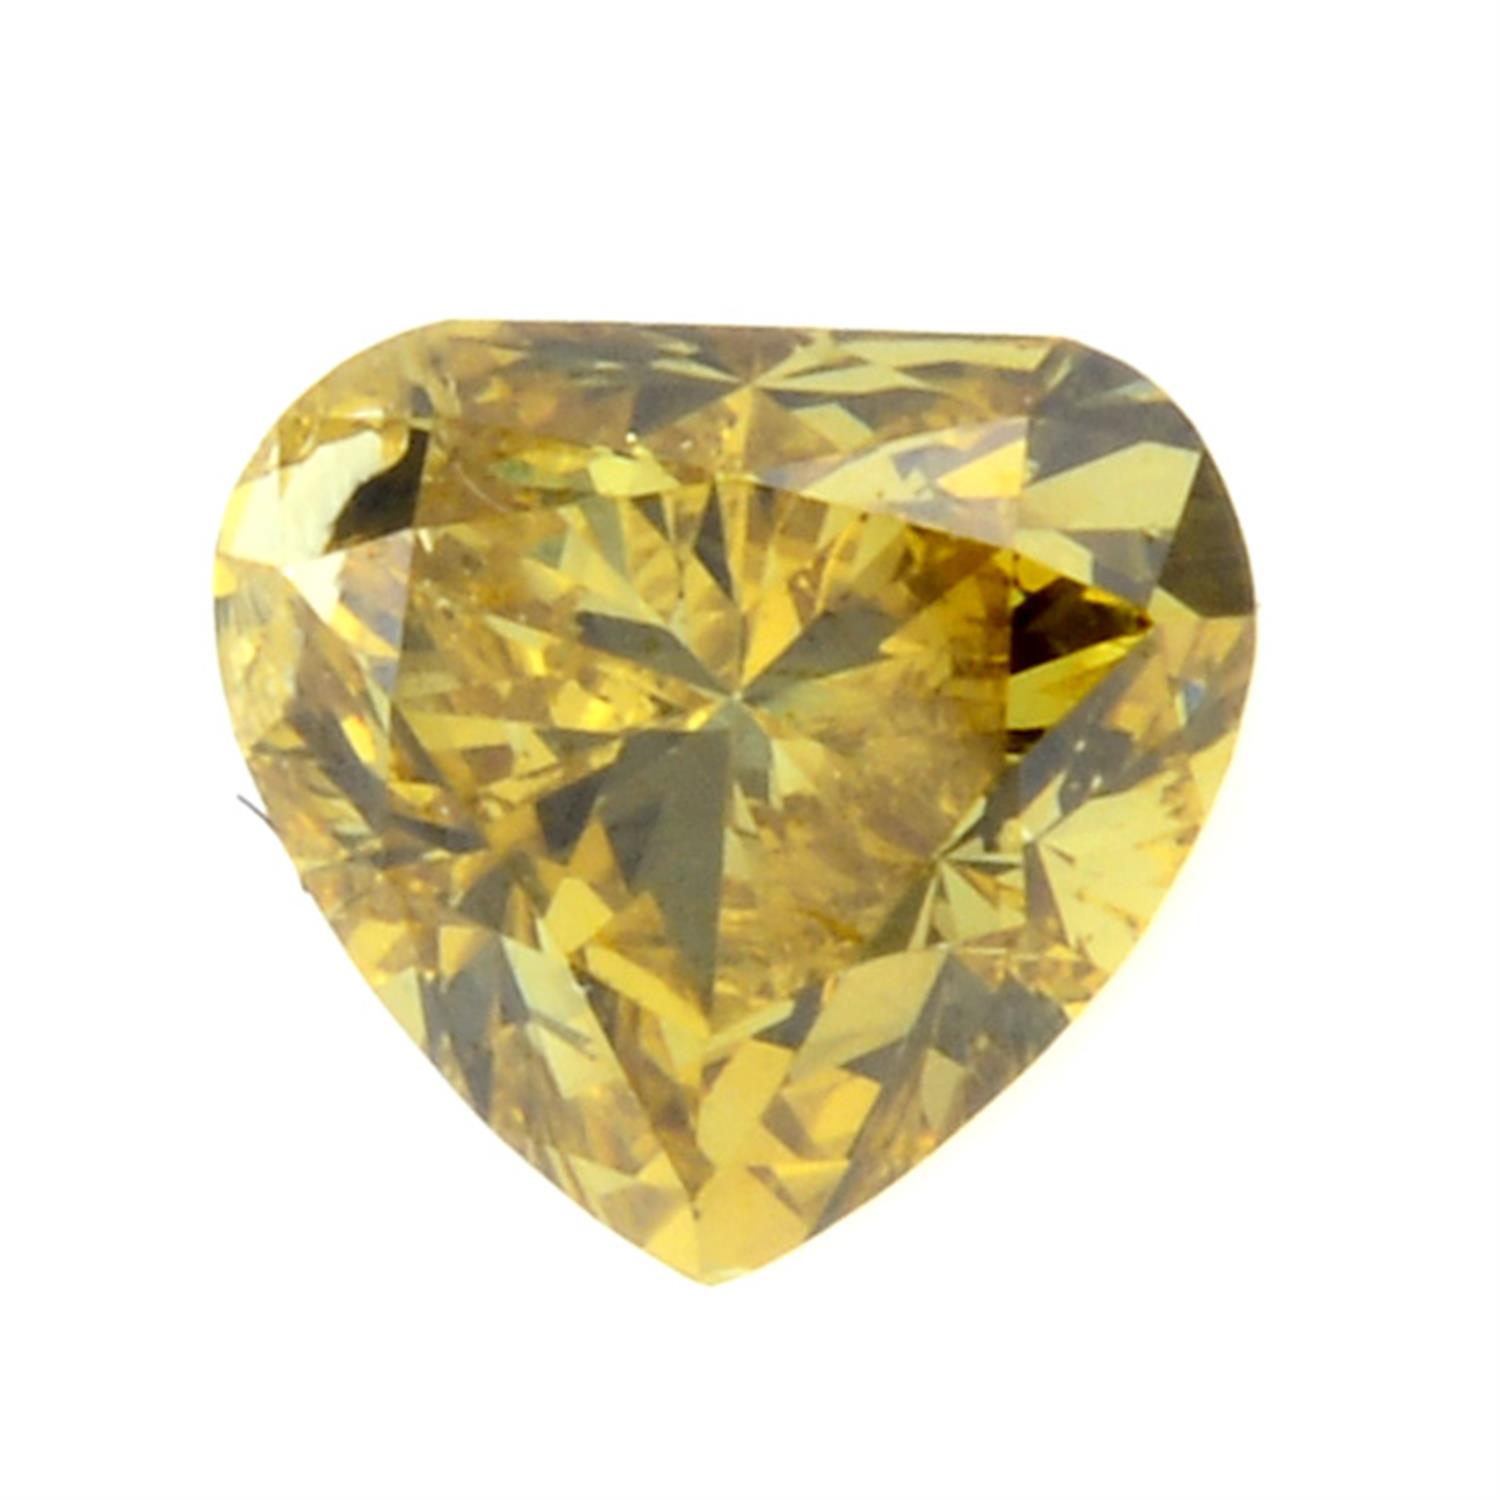 A pear shape fancy deep brownish yellow diamond, weighing 0.24ct